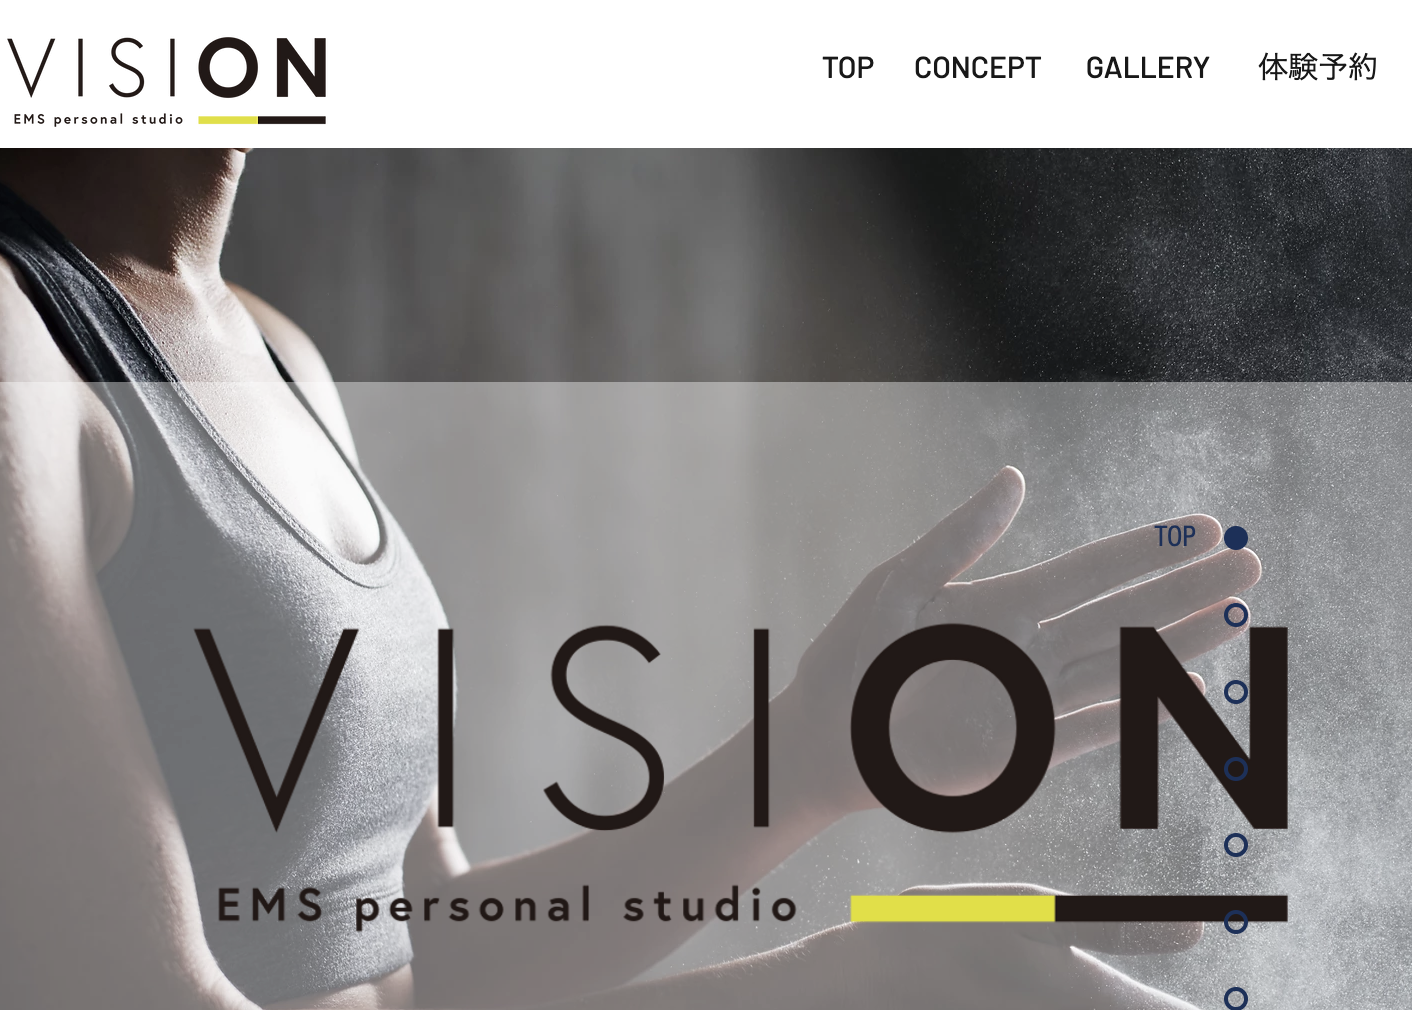 13.VISION EMS personal studio